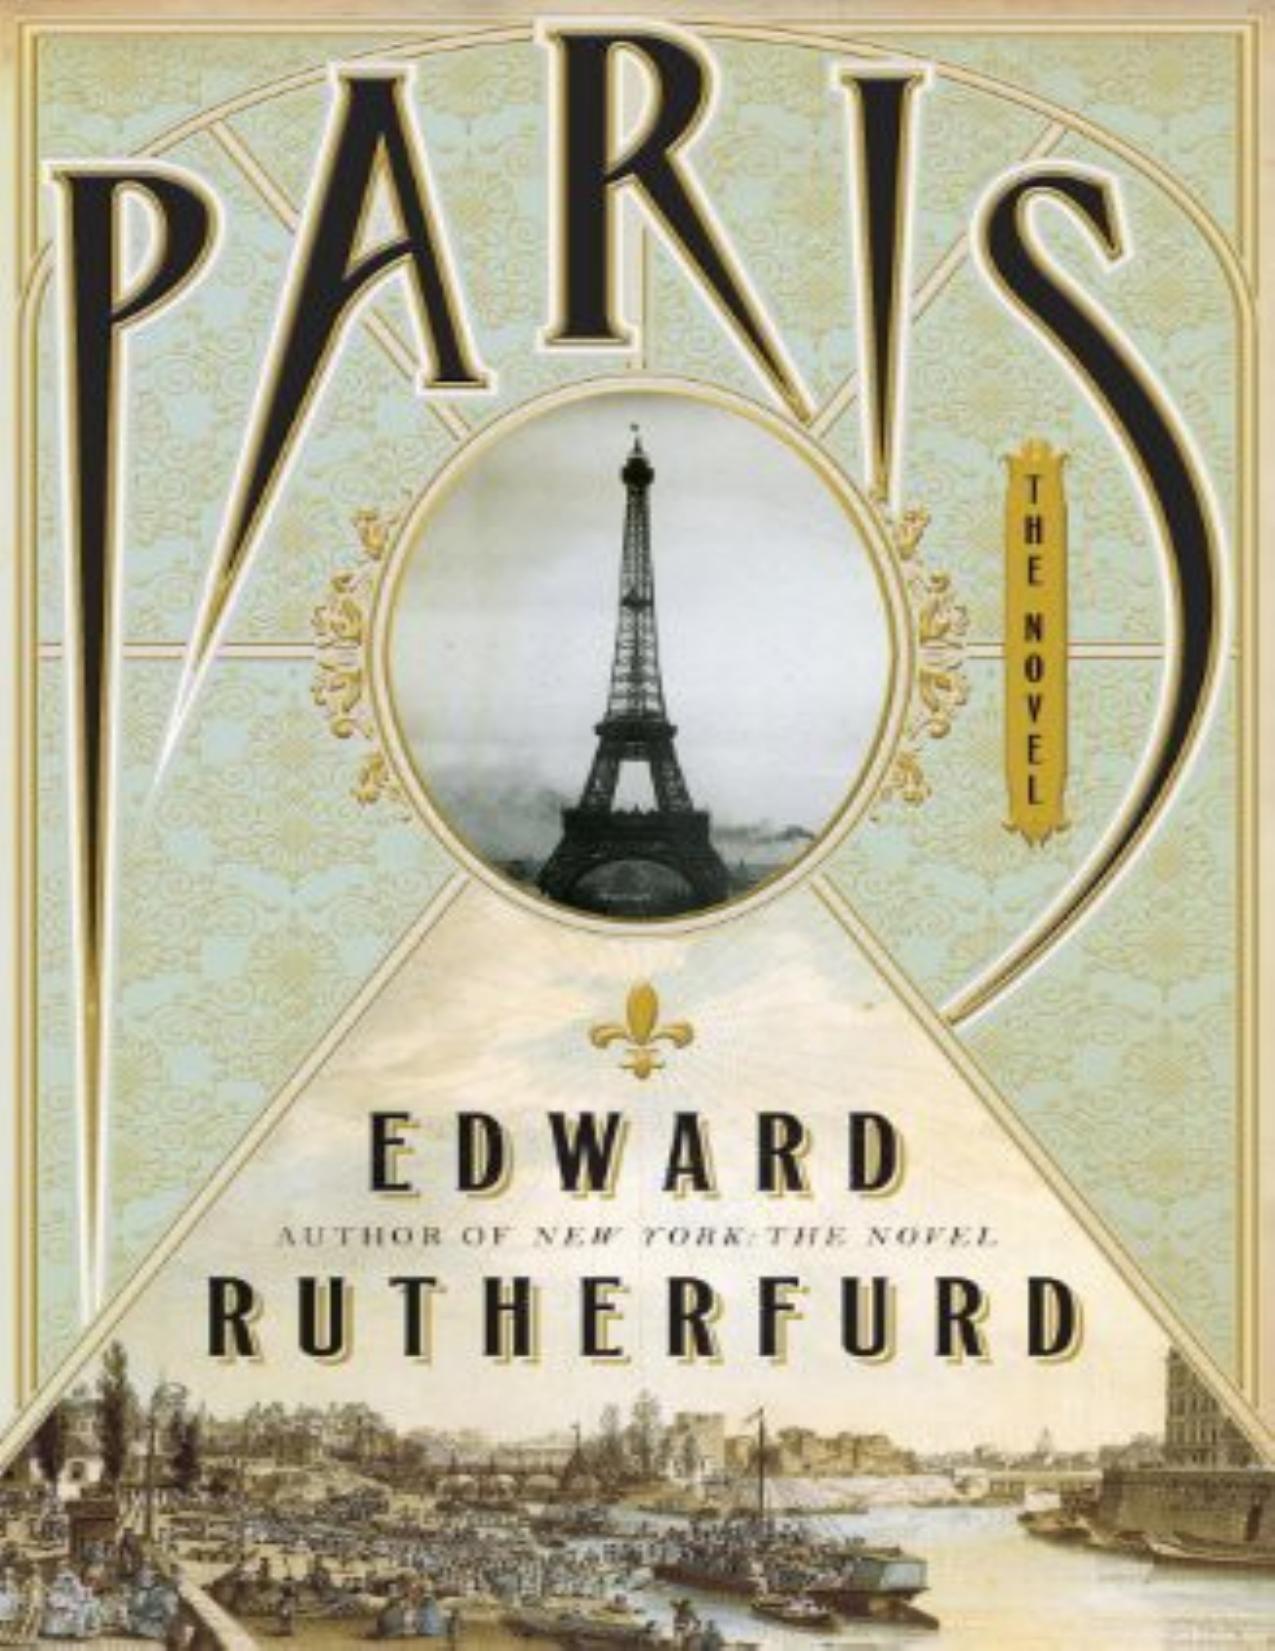 Paris: The Novel by Edward Rutherfurd